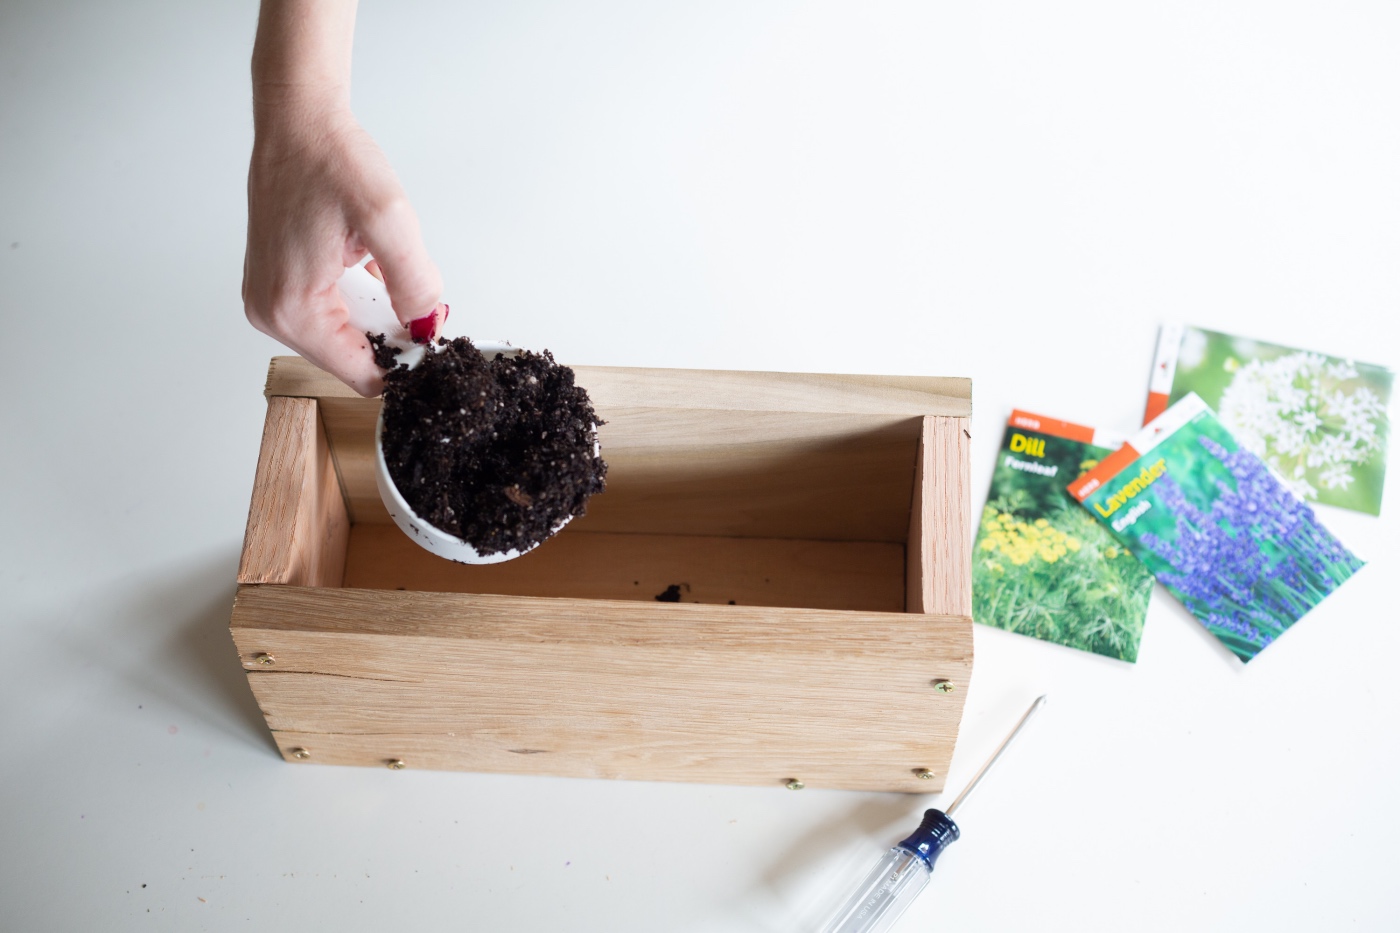 add soil to the diy wood planter box - gardening diy tutorial